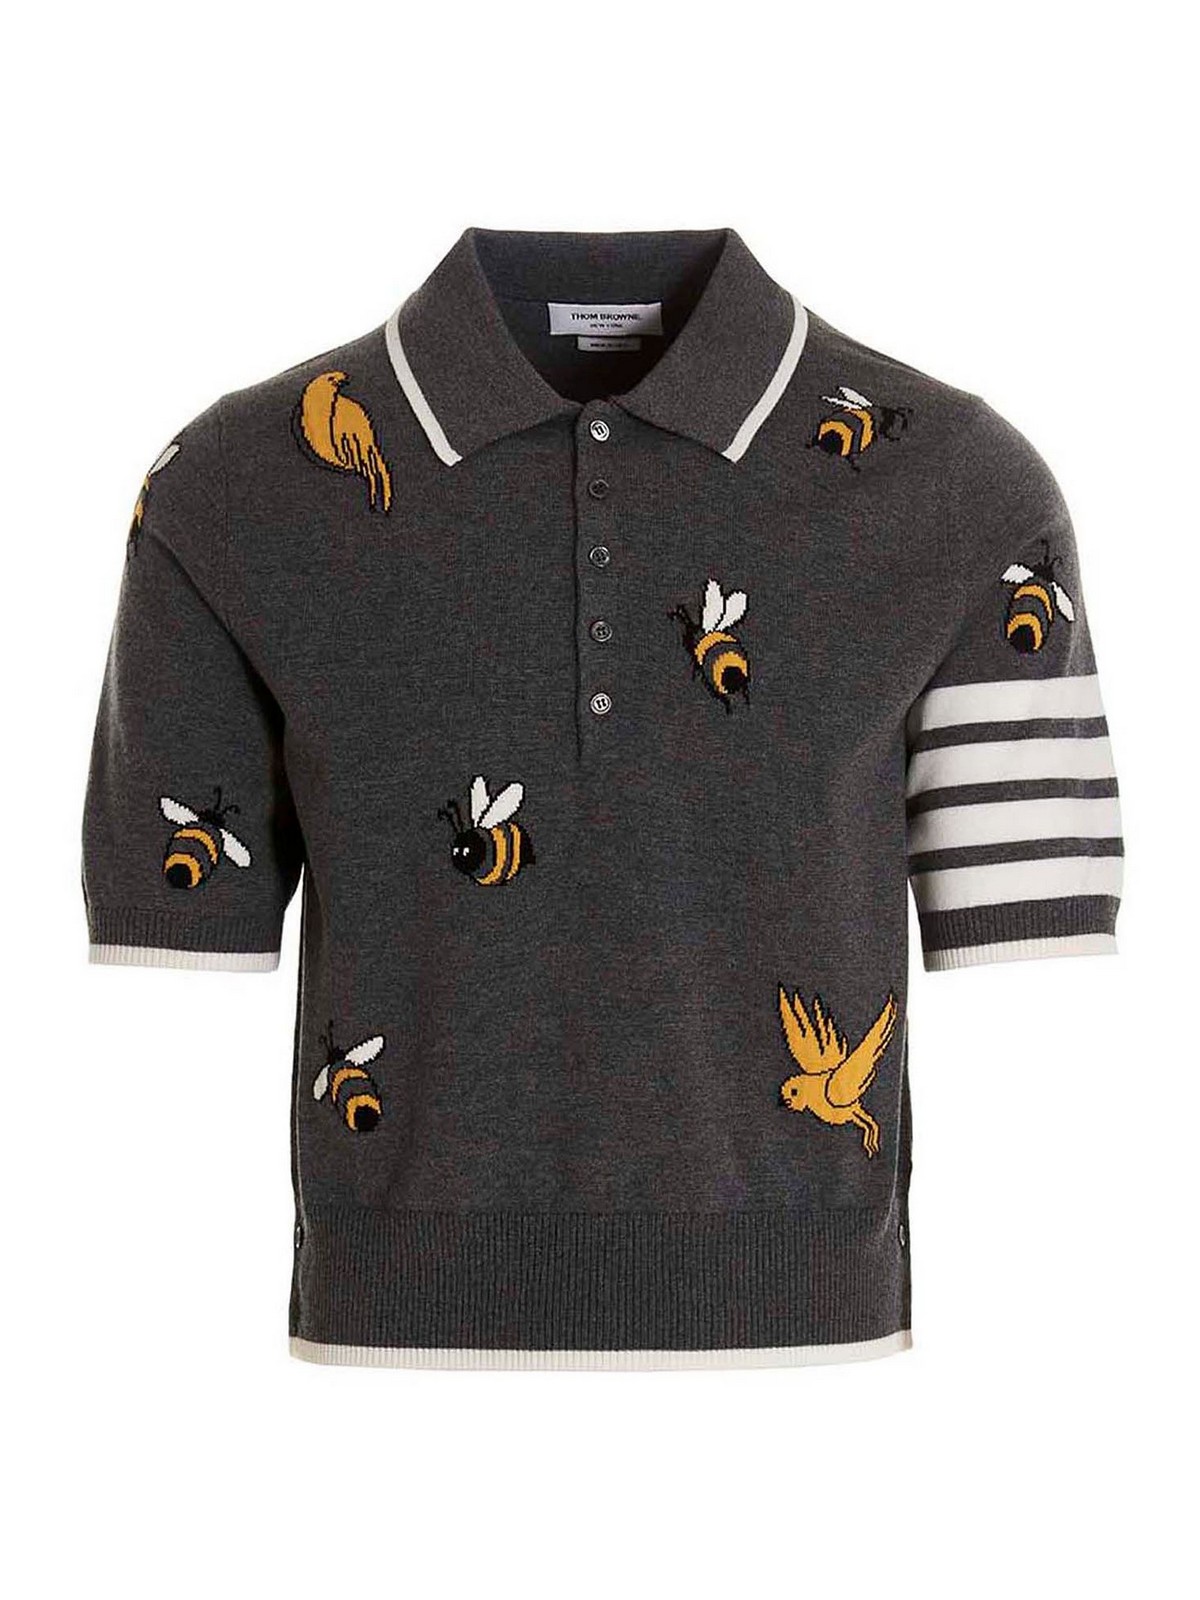 Authentic Gucci Children's Cotton Web-Detail Bee Polo Shirt Size 5